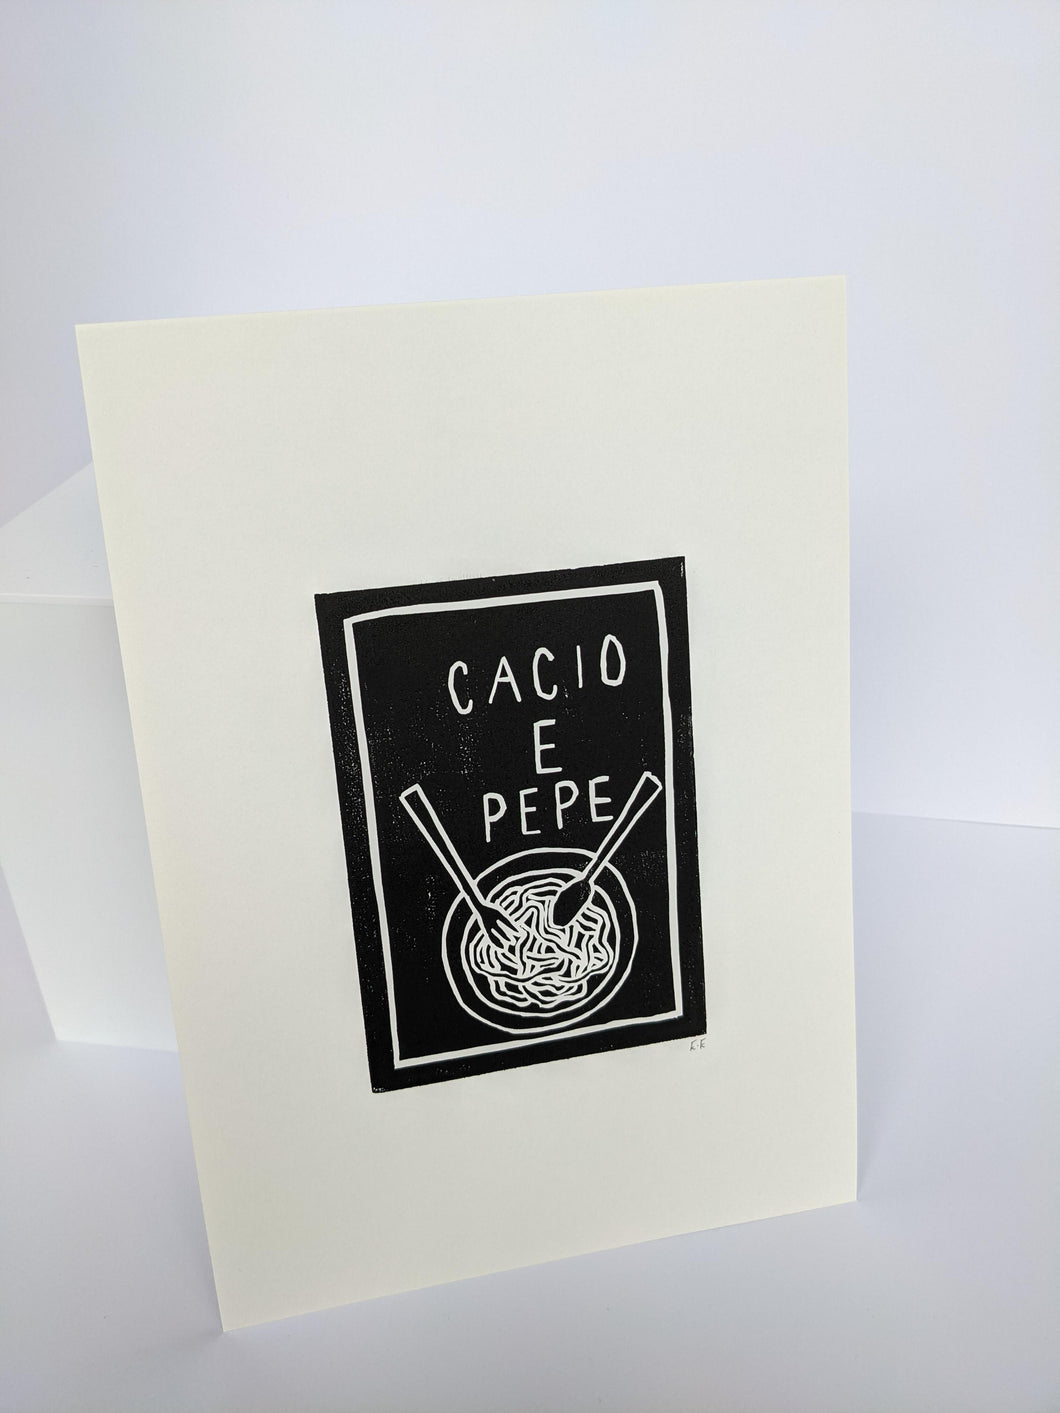 Black and white cacio e pepe print on a white background